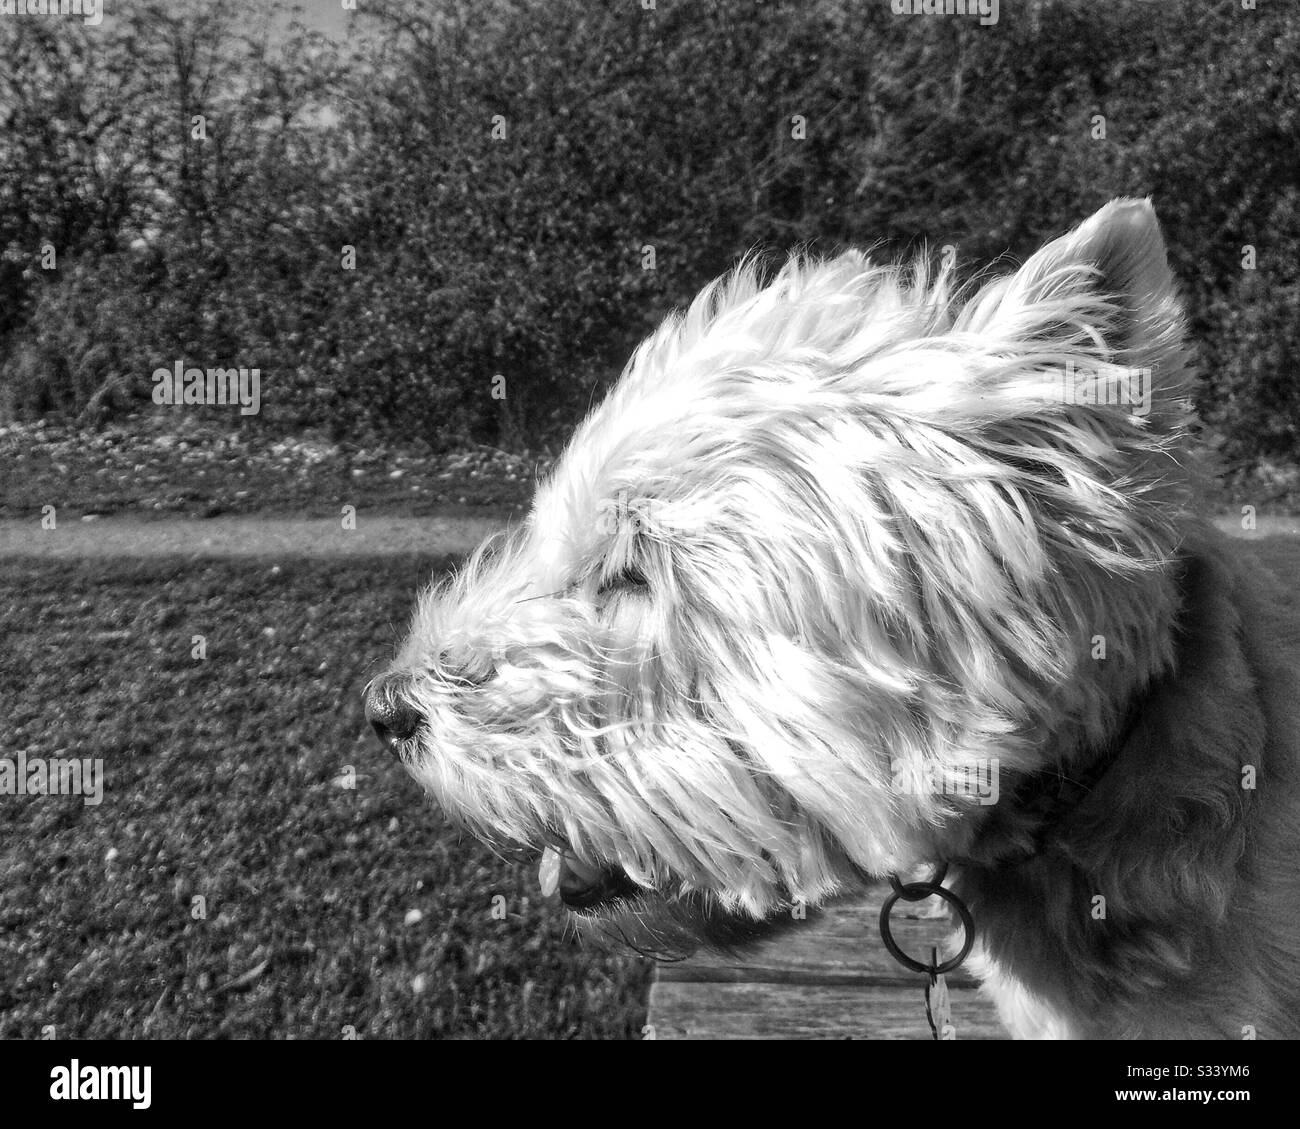 West Highland White Terrier, teniendo un mal día de cabello, frente a un fuerte viento. Foto de stock